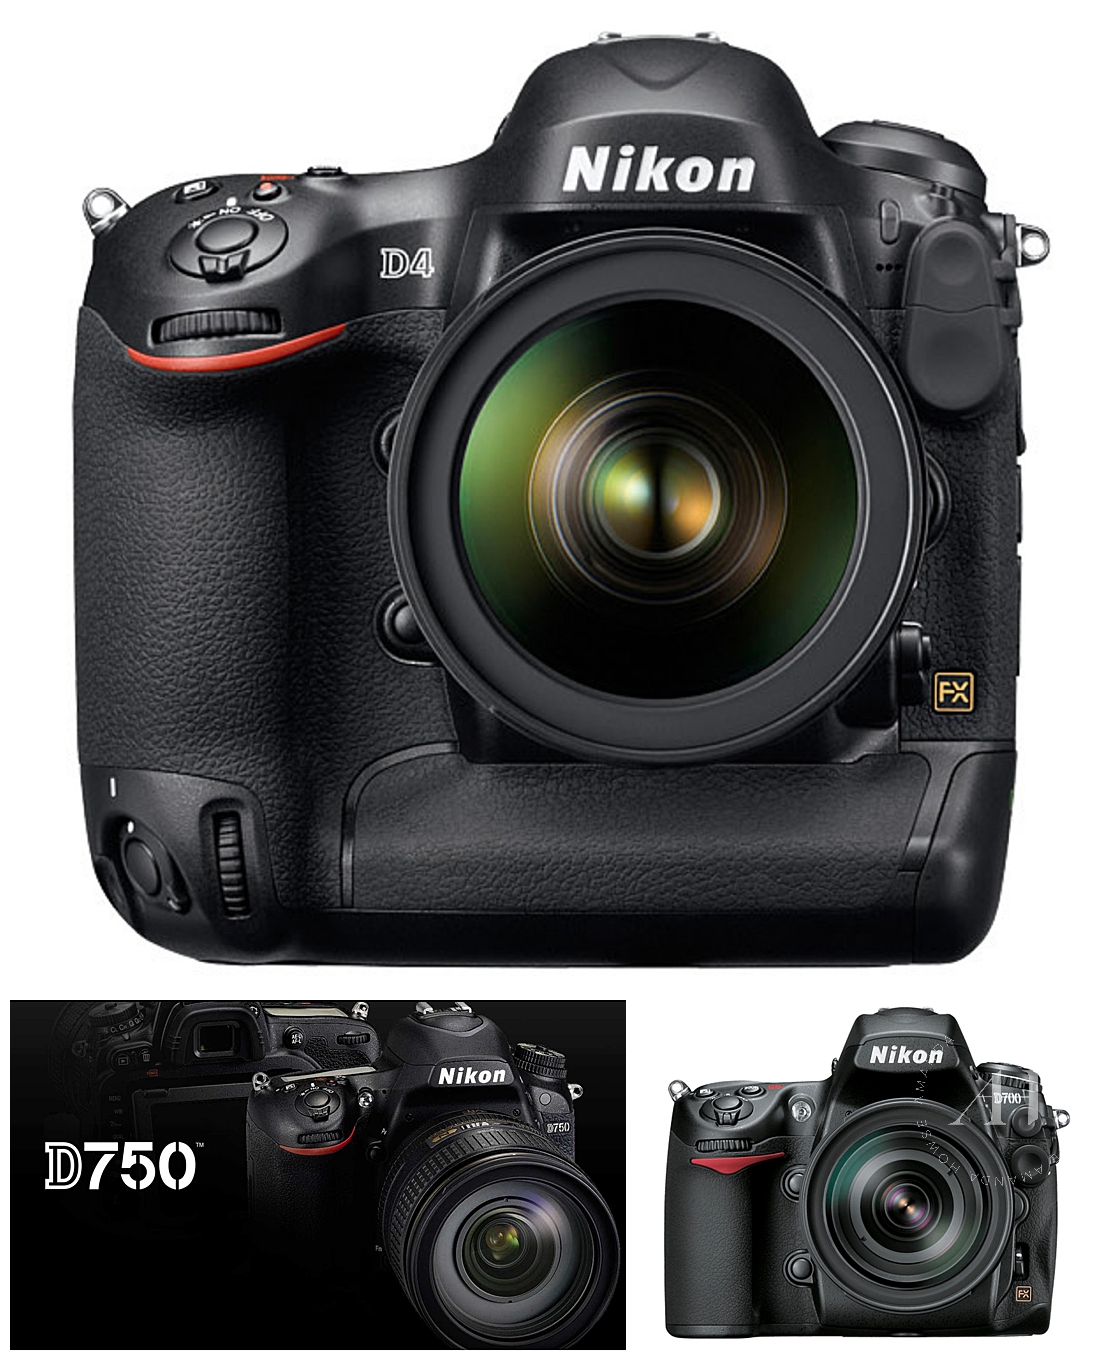 Nikon Cameras for Senior Portraits | An Equipment Guide from Tacoma's Best Senior Photographer Amanda Howse